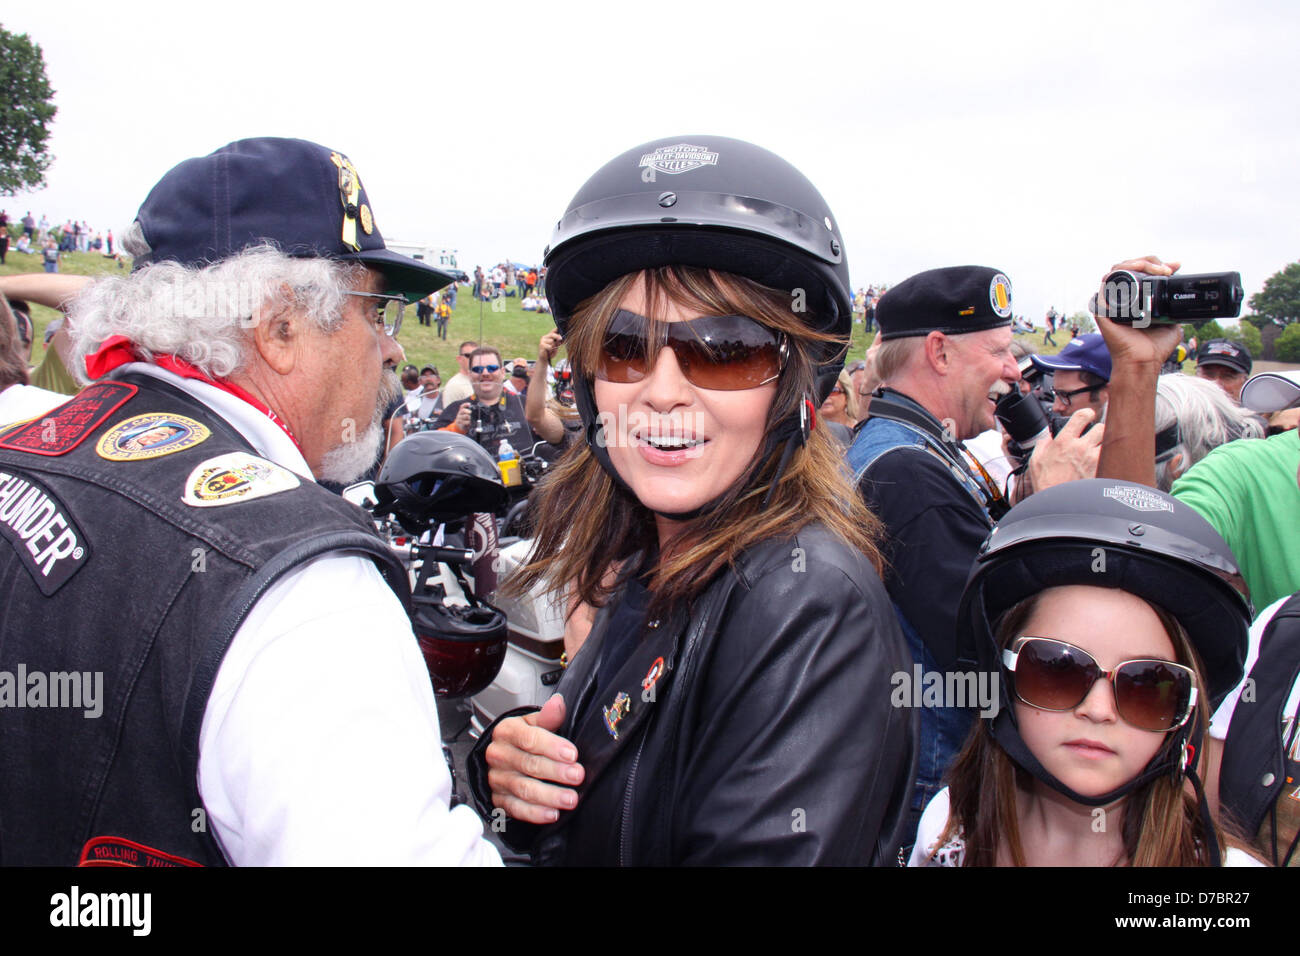 Sarah Palin, Piper Palin and their family participate the annual Rolling Thunder rally for POW/MIA Arlington, Virginia - Stock Photo